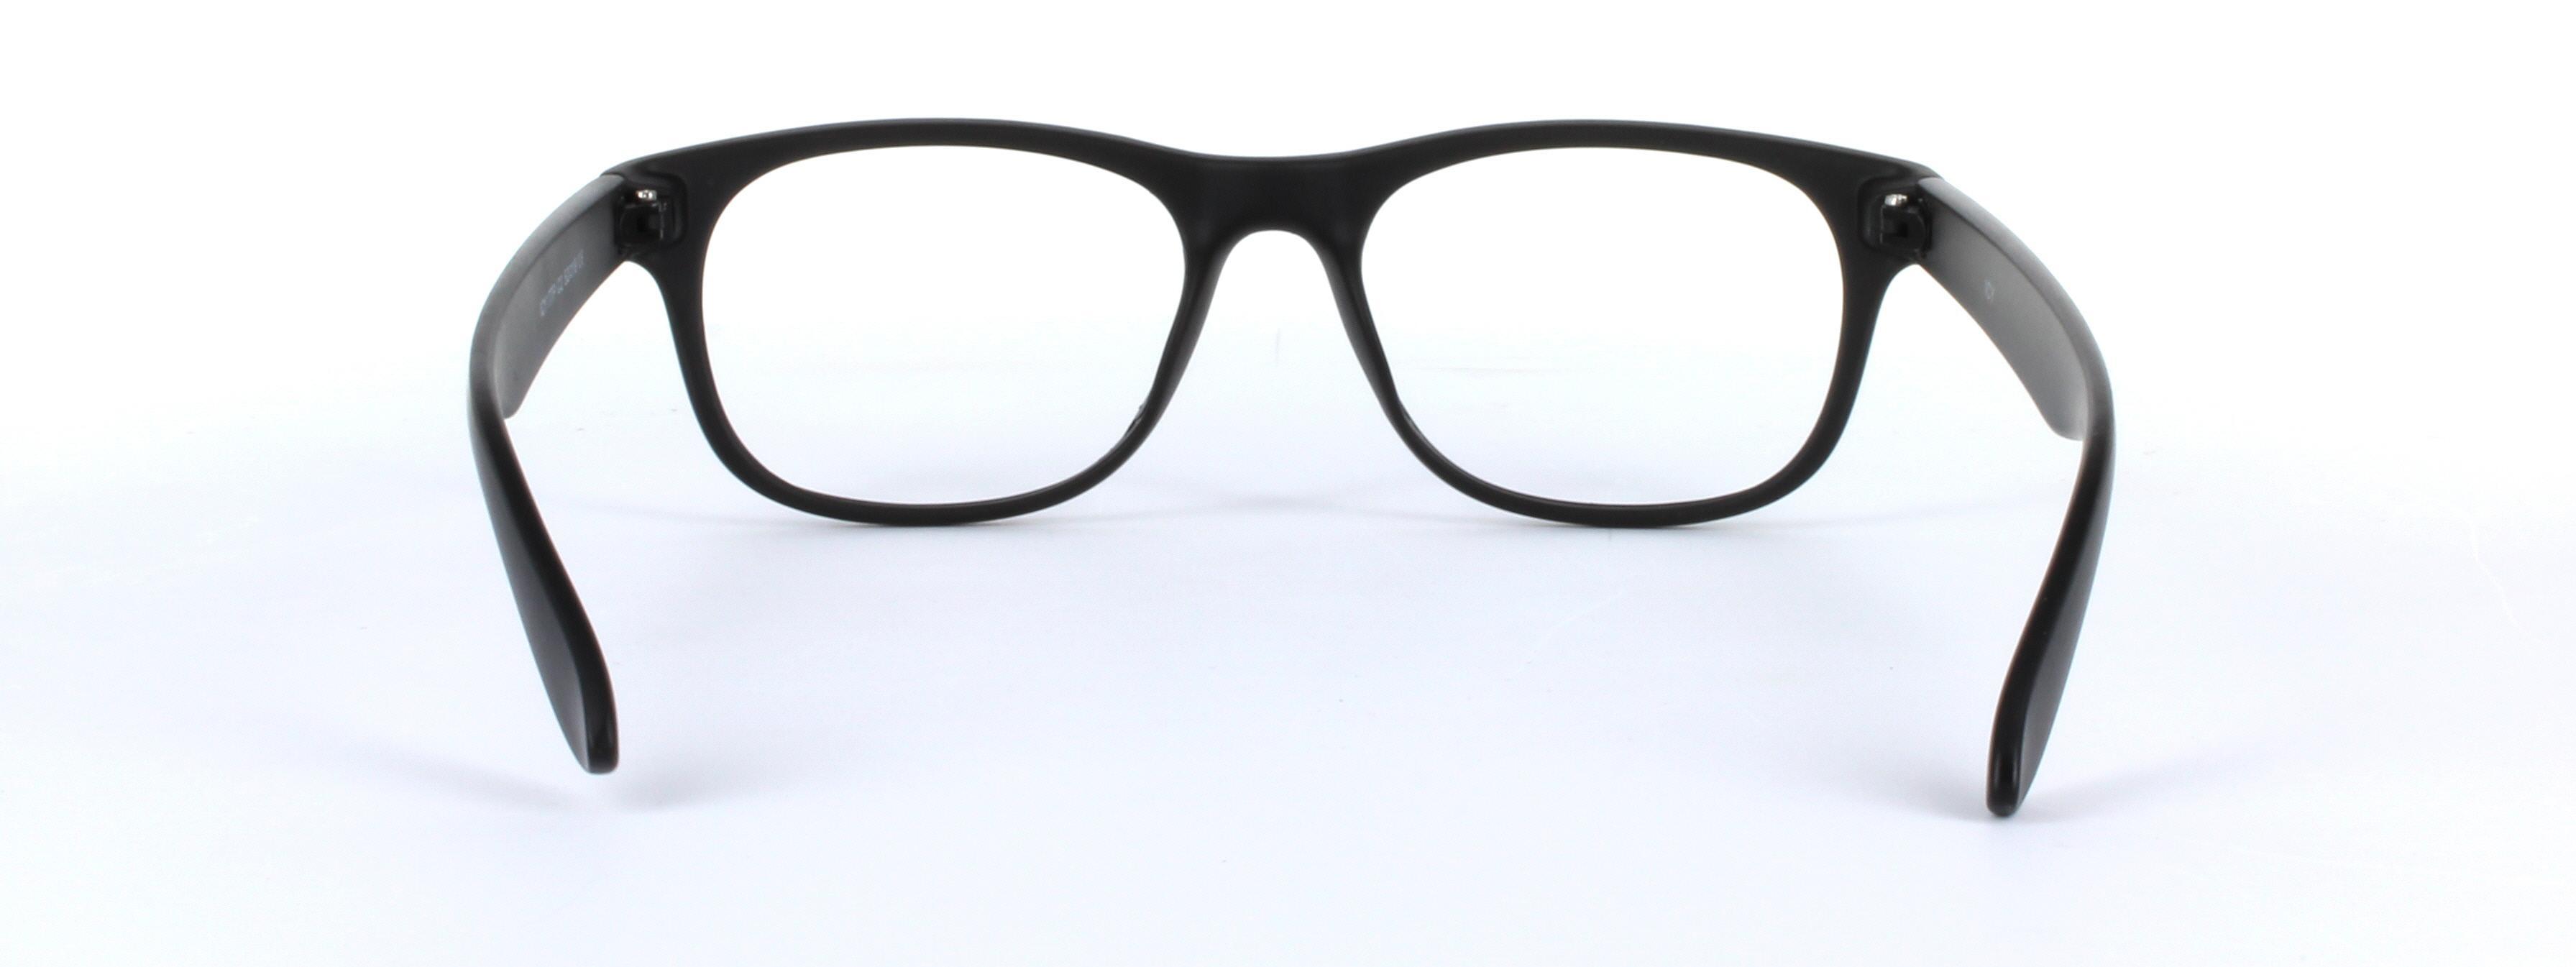 Brazil Black Full Rim Oval Plastic Glasses - Image View 3